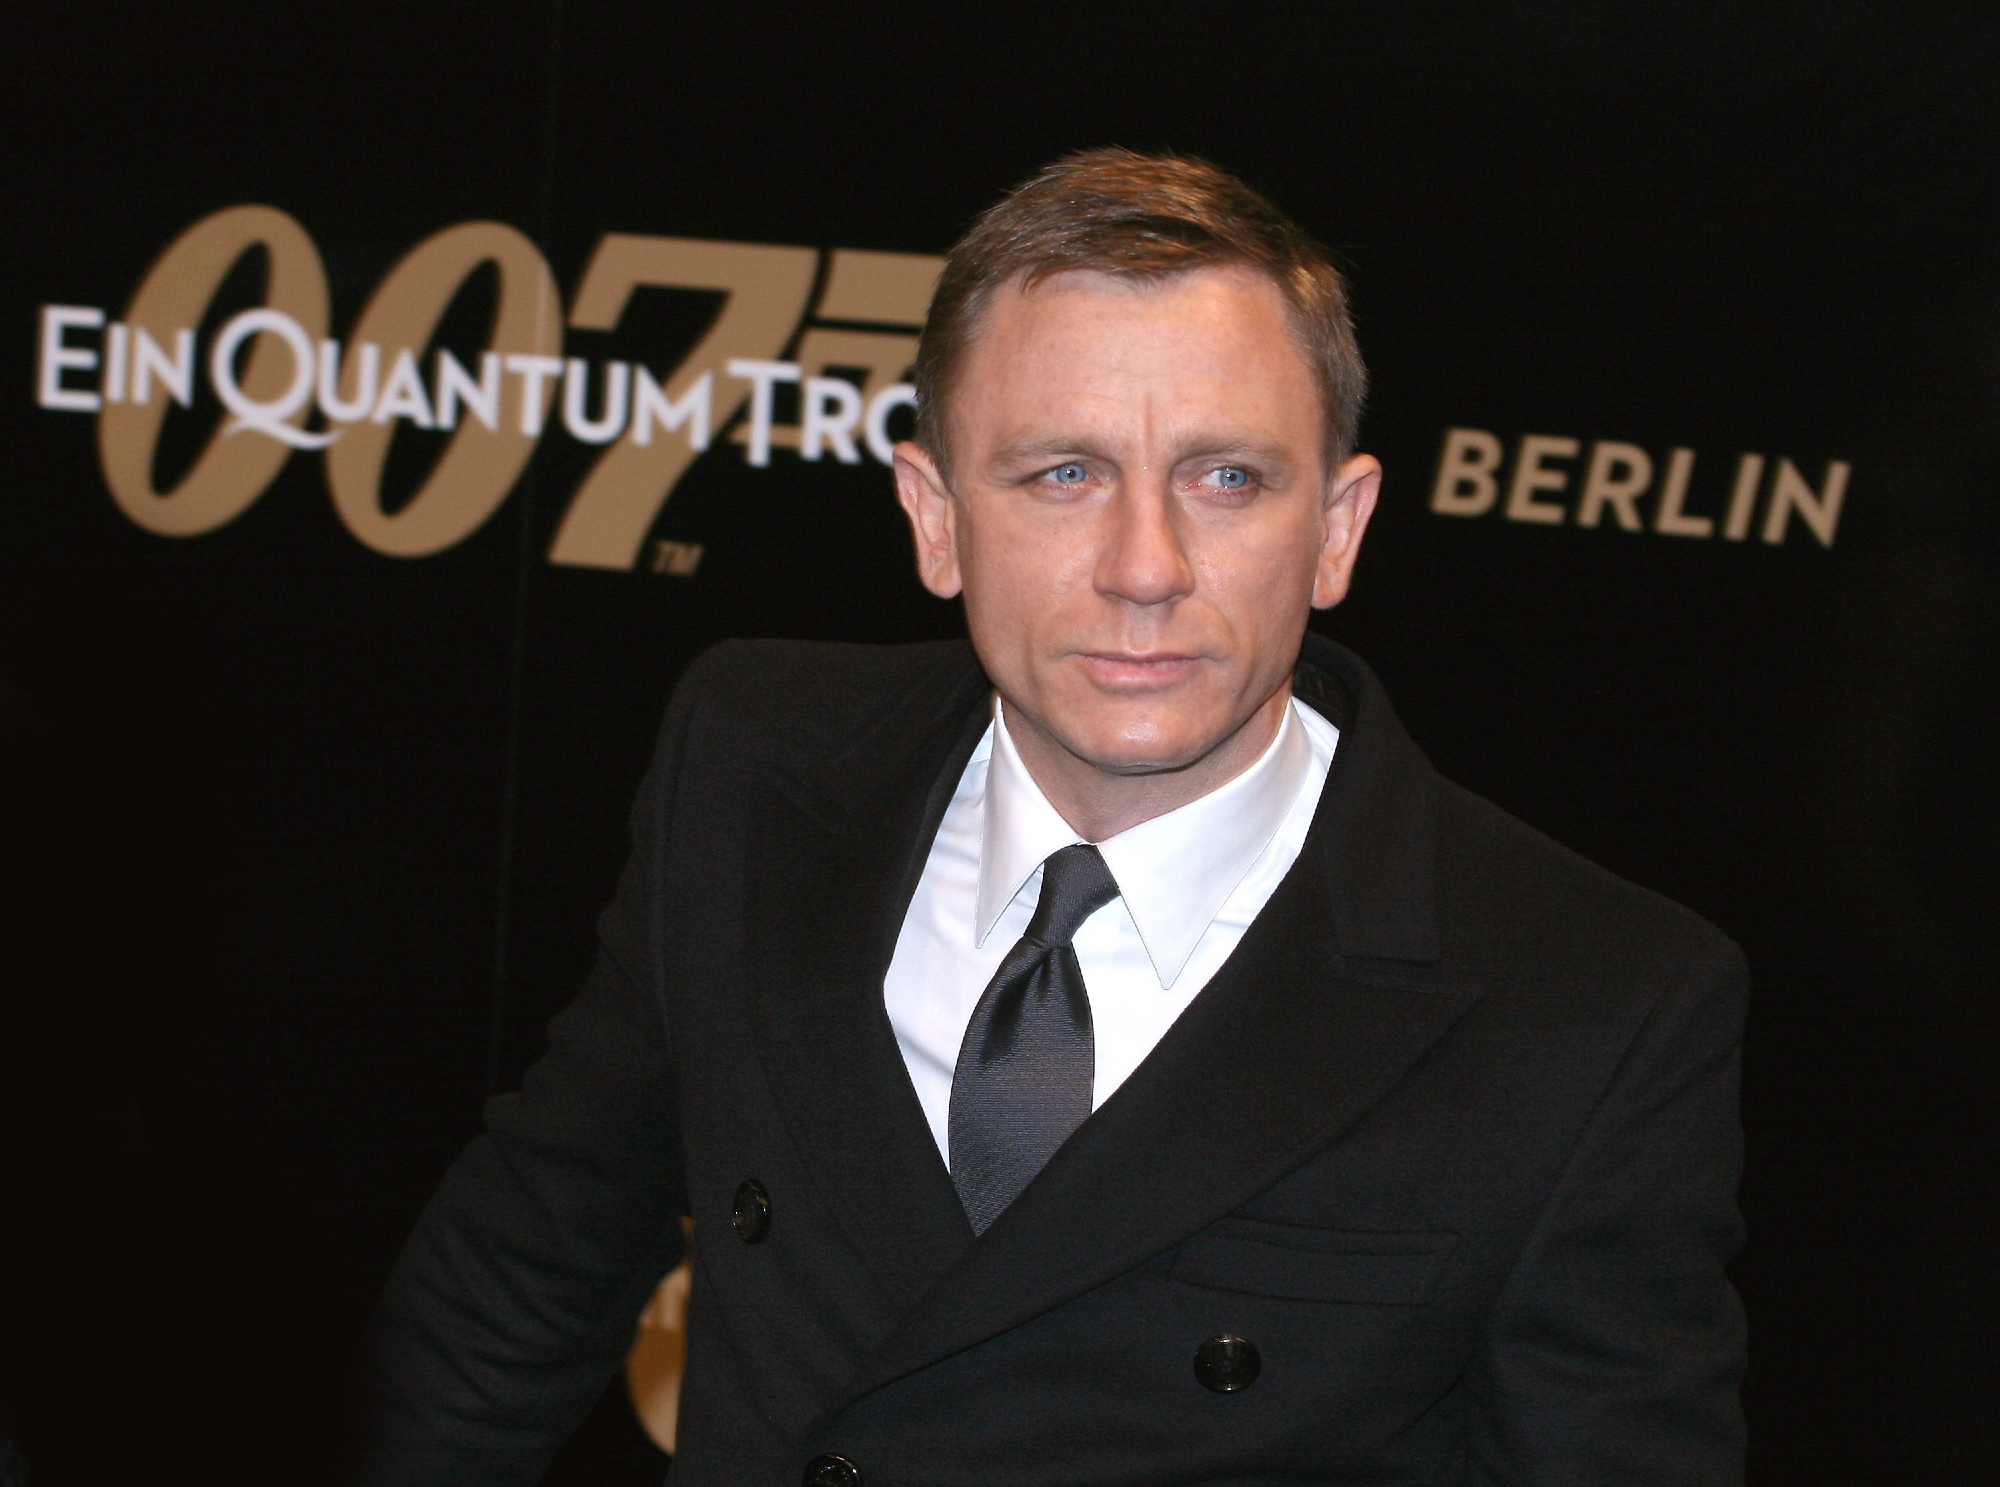 James Bond actor Daniel Craig at the 'Quantum of Solace' Berlin premiere